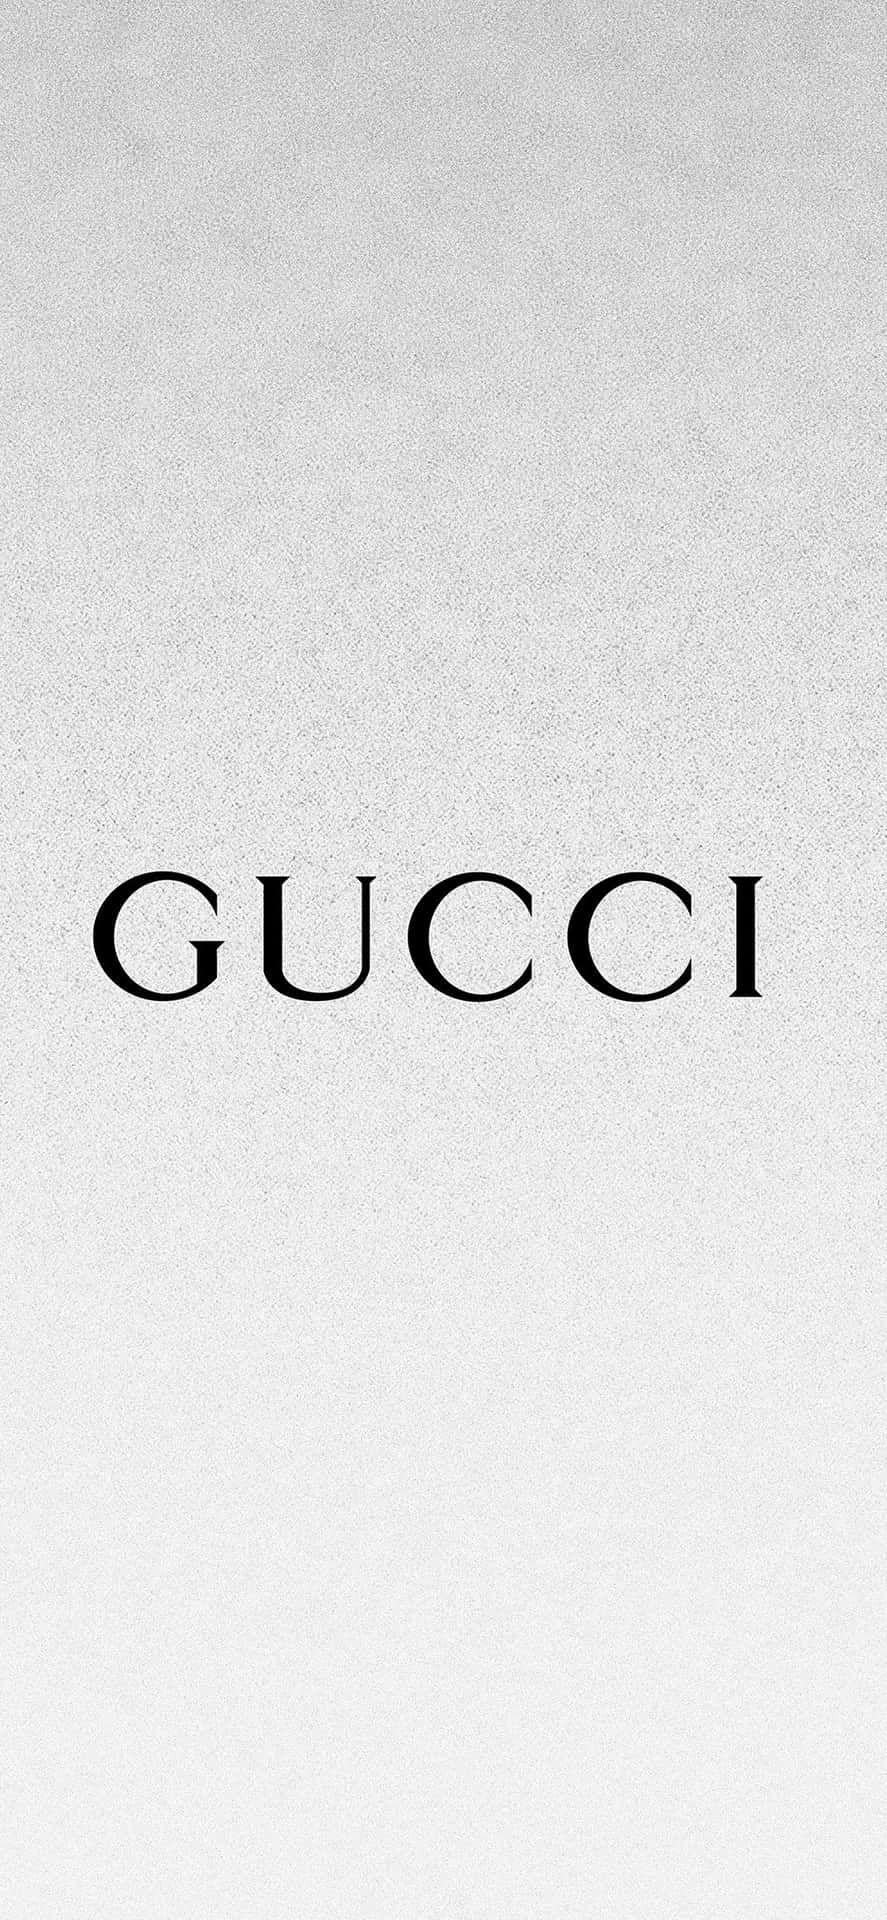 Elegantsilver Vit Gucci Textbakgrund